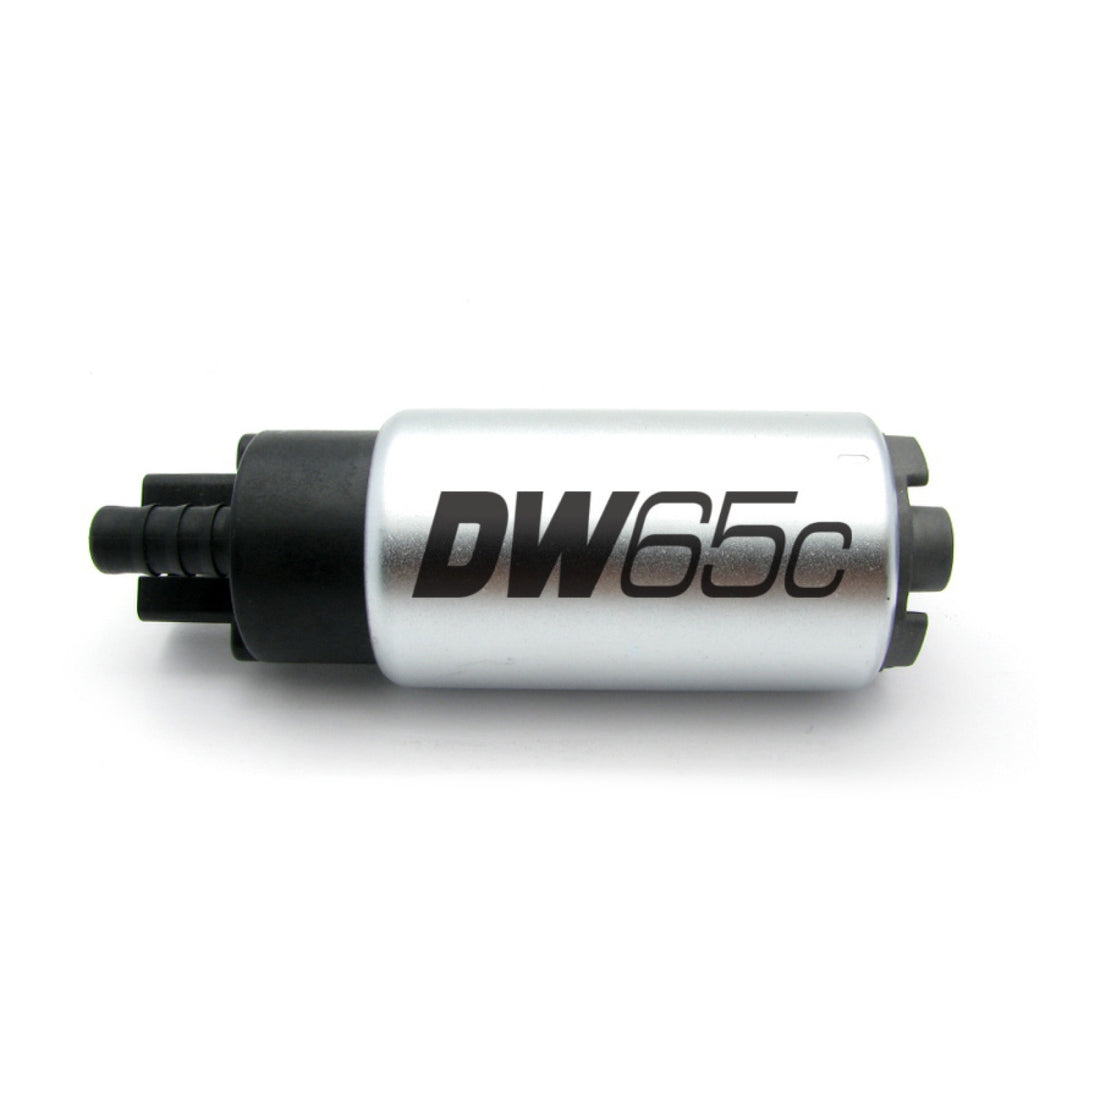 Deatschwerks DW65C 265lph Fuel Pump for 88-91 BMW 325i/BMW M3 Models